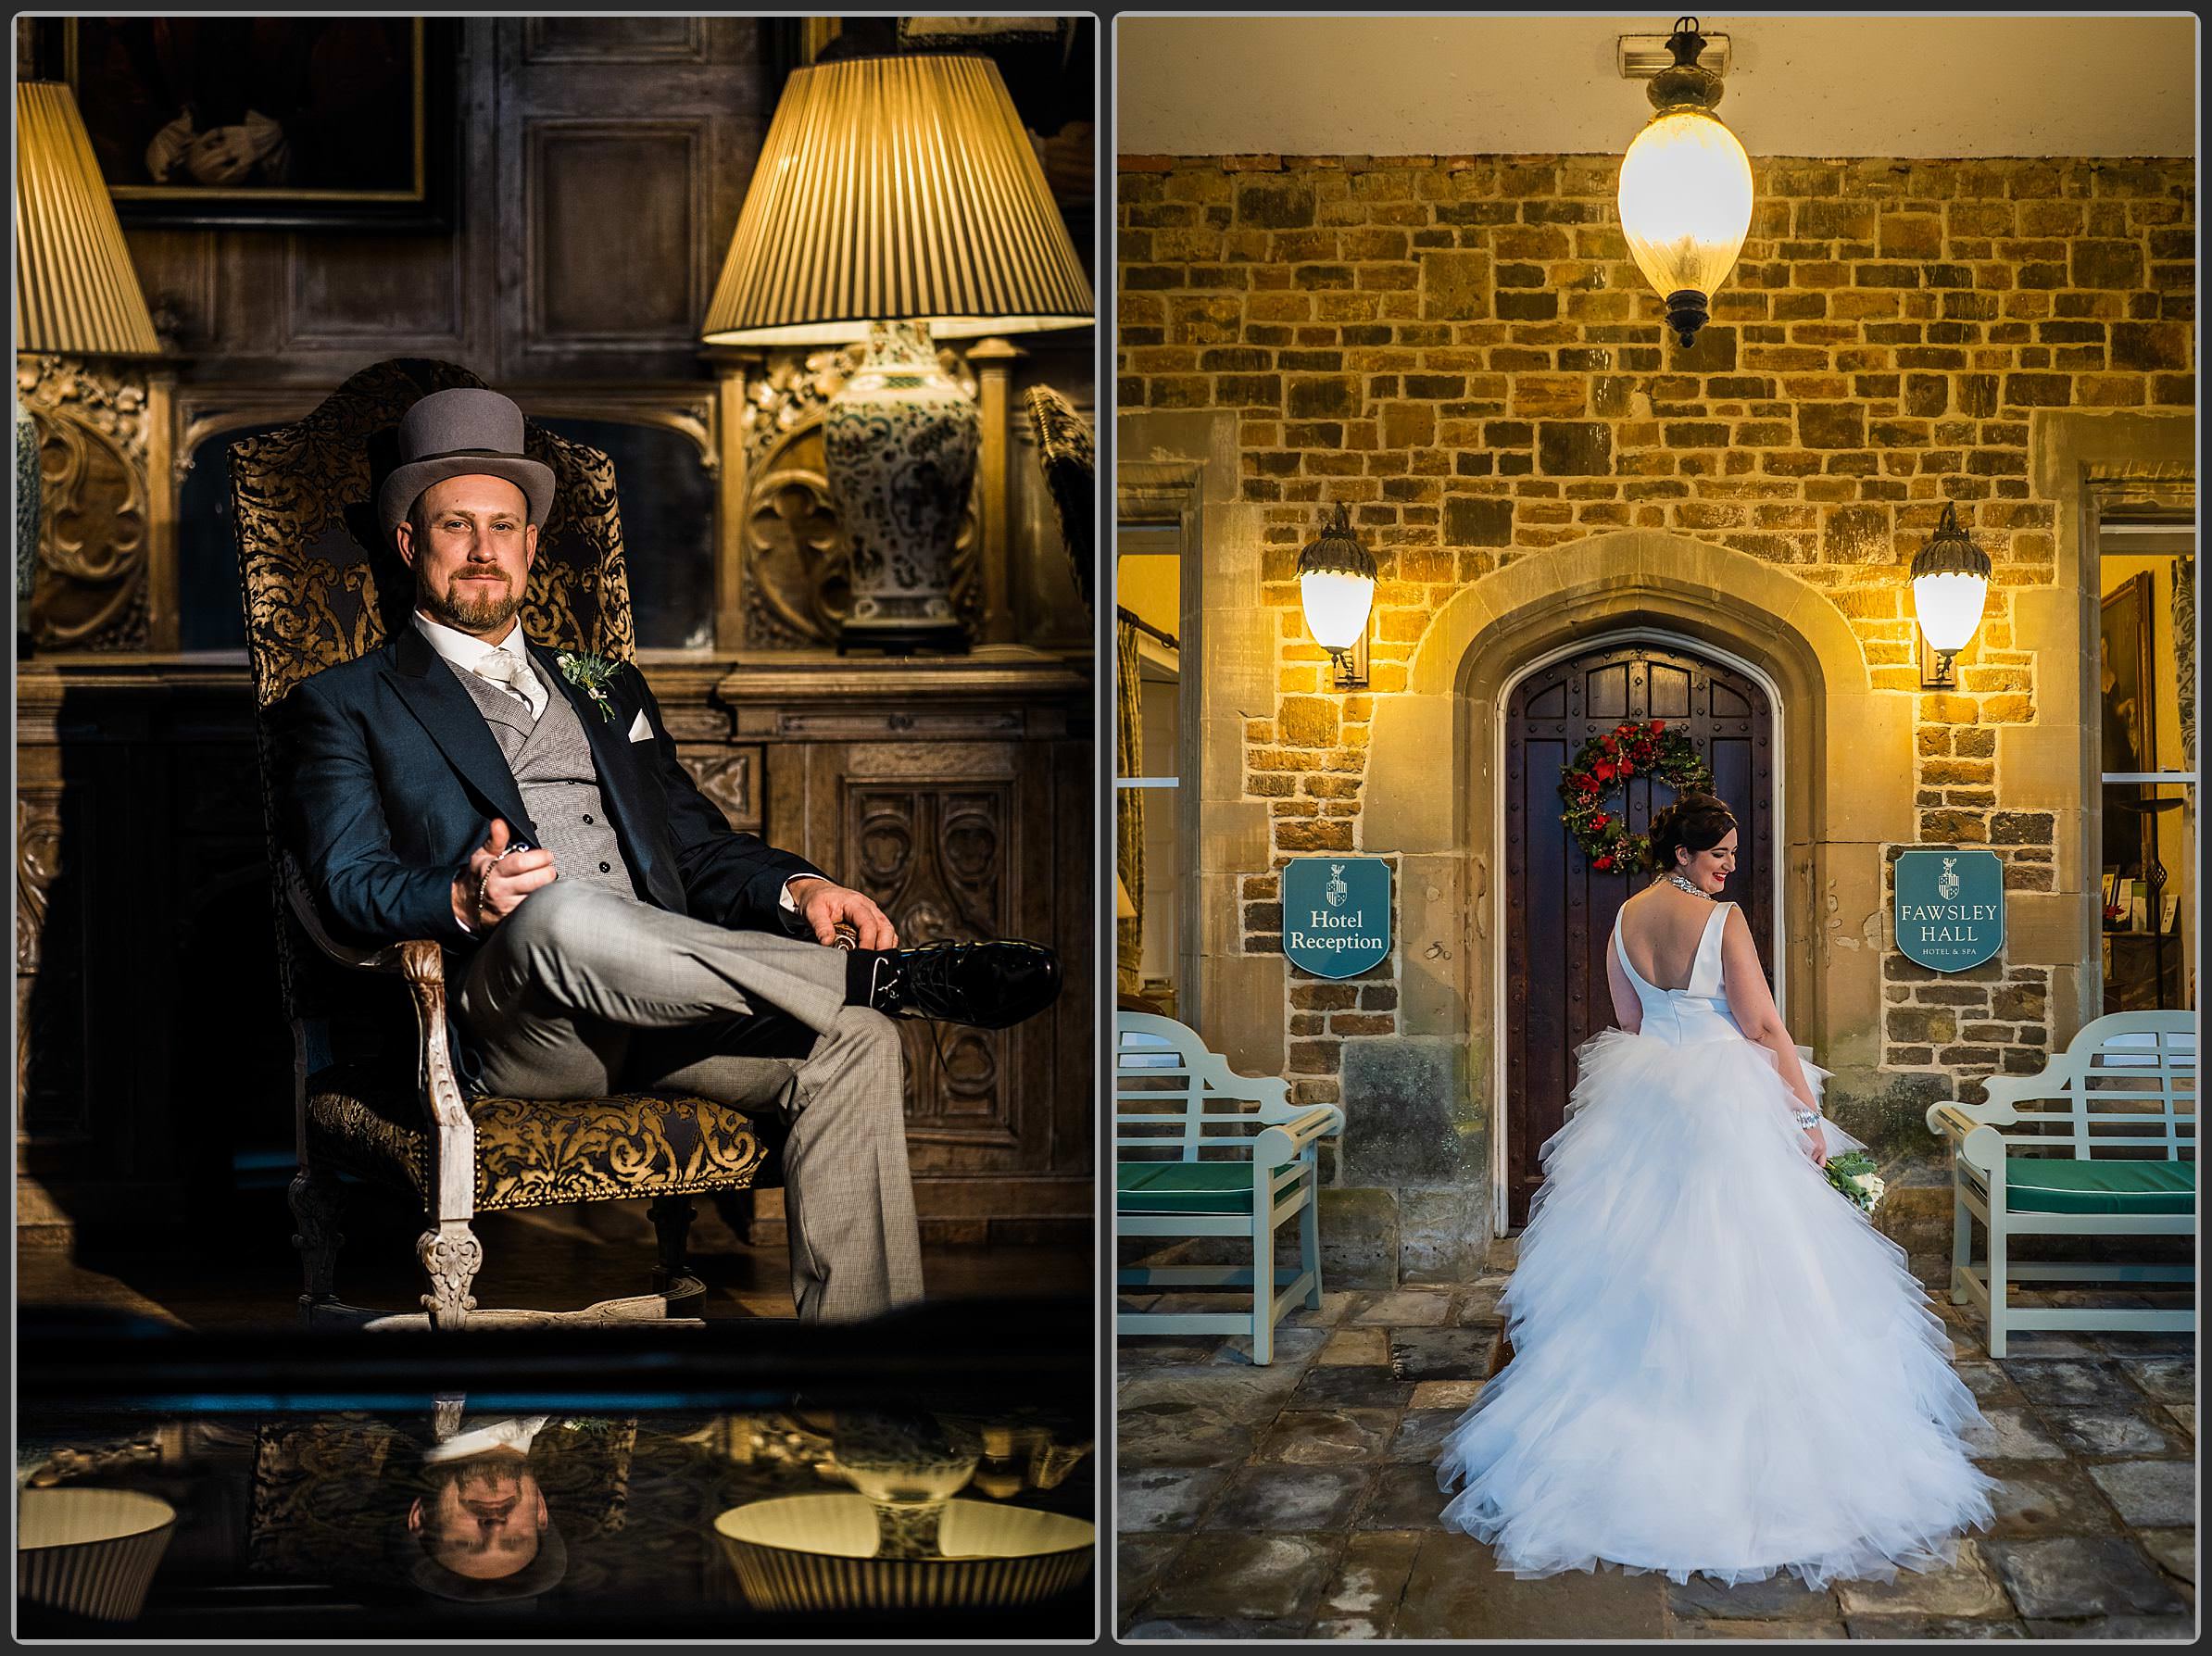 Fawsley Hall Hotel wedding photos